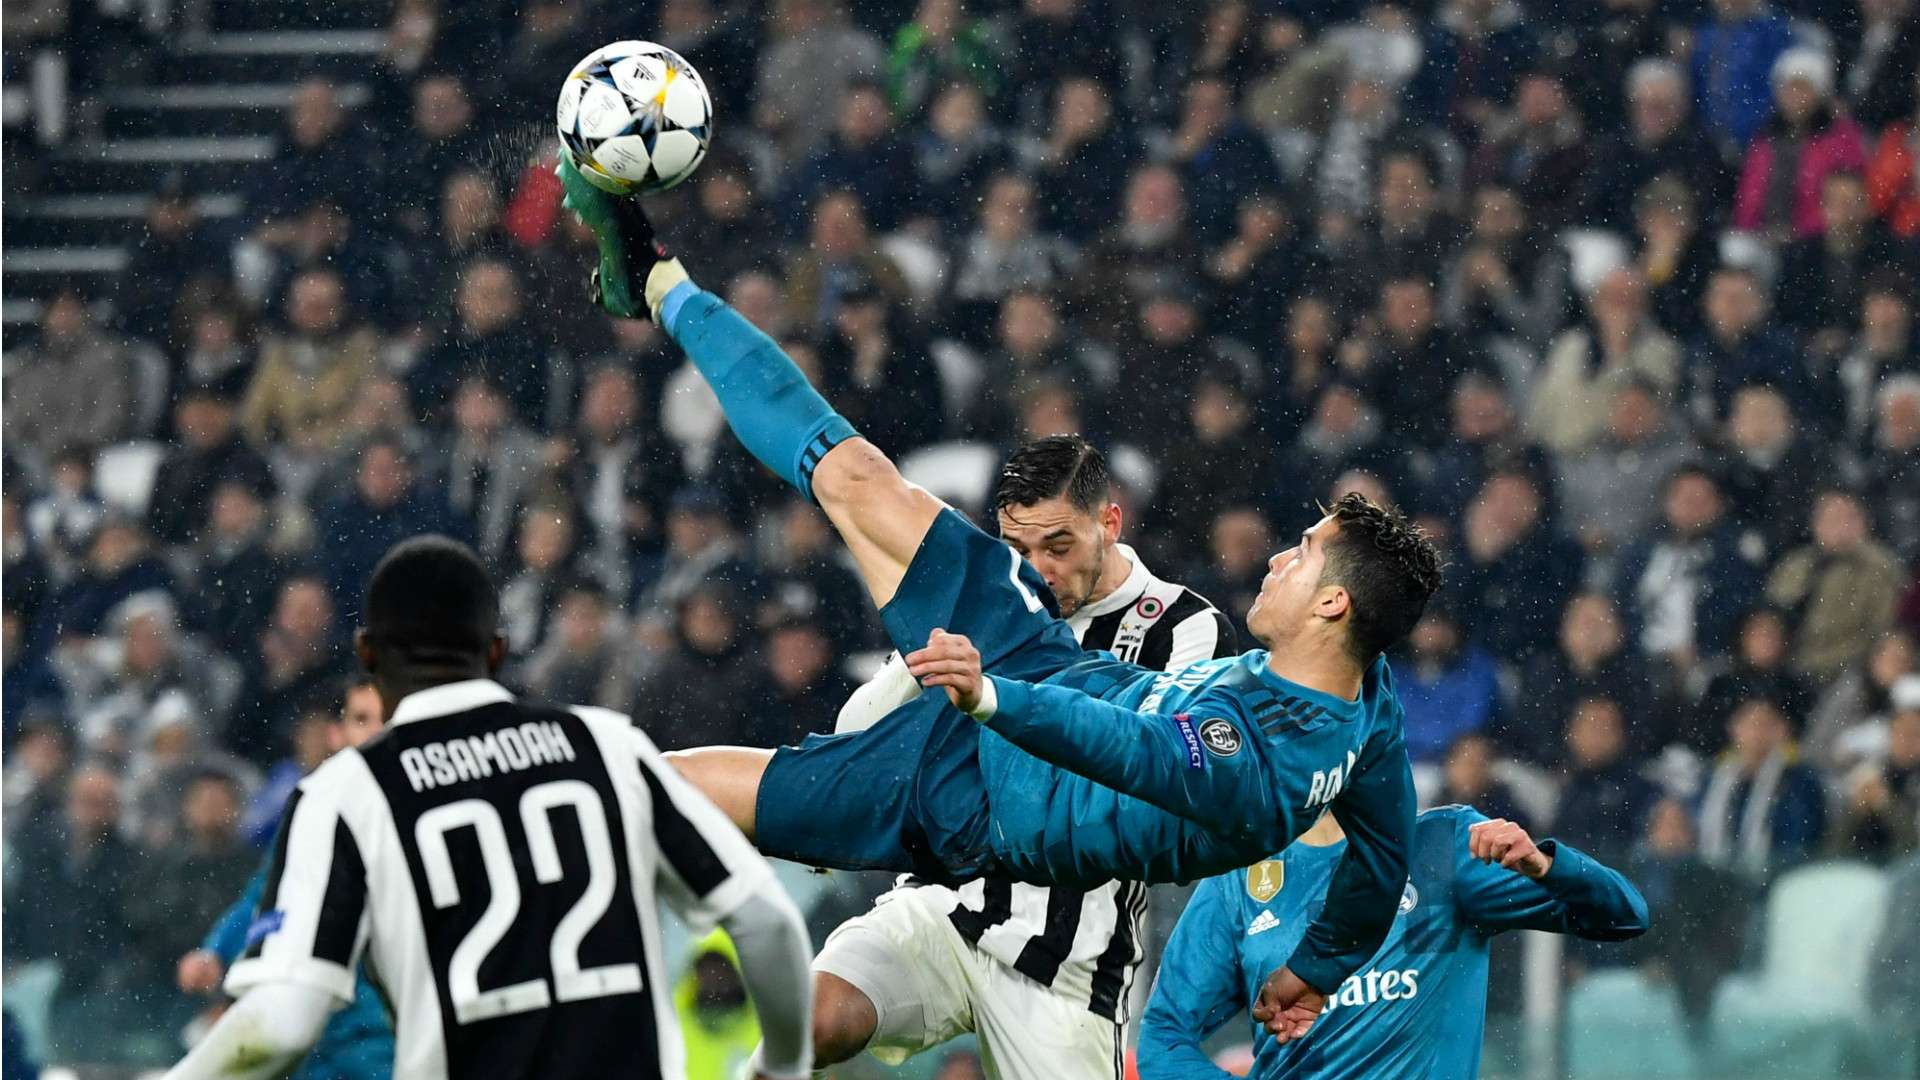 Cristiano Real Madrid Juventus UEFA Champions League Bicycle kick overhead kick